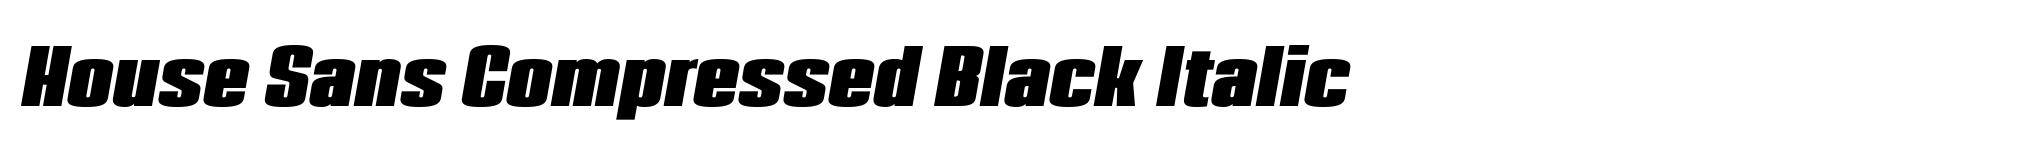 House Sans Compressed Black Italic image